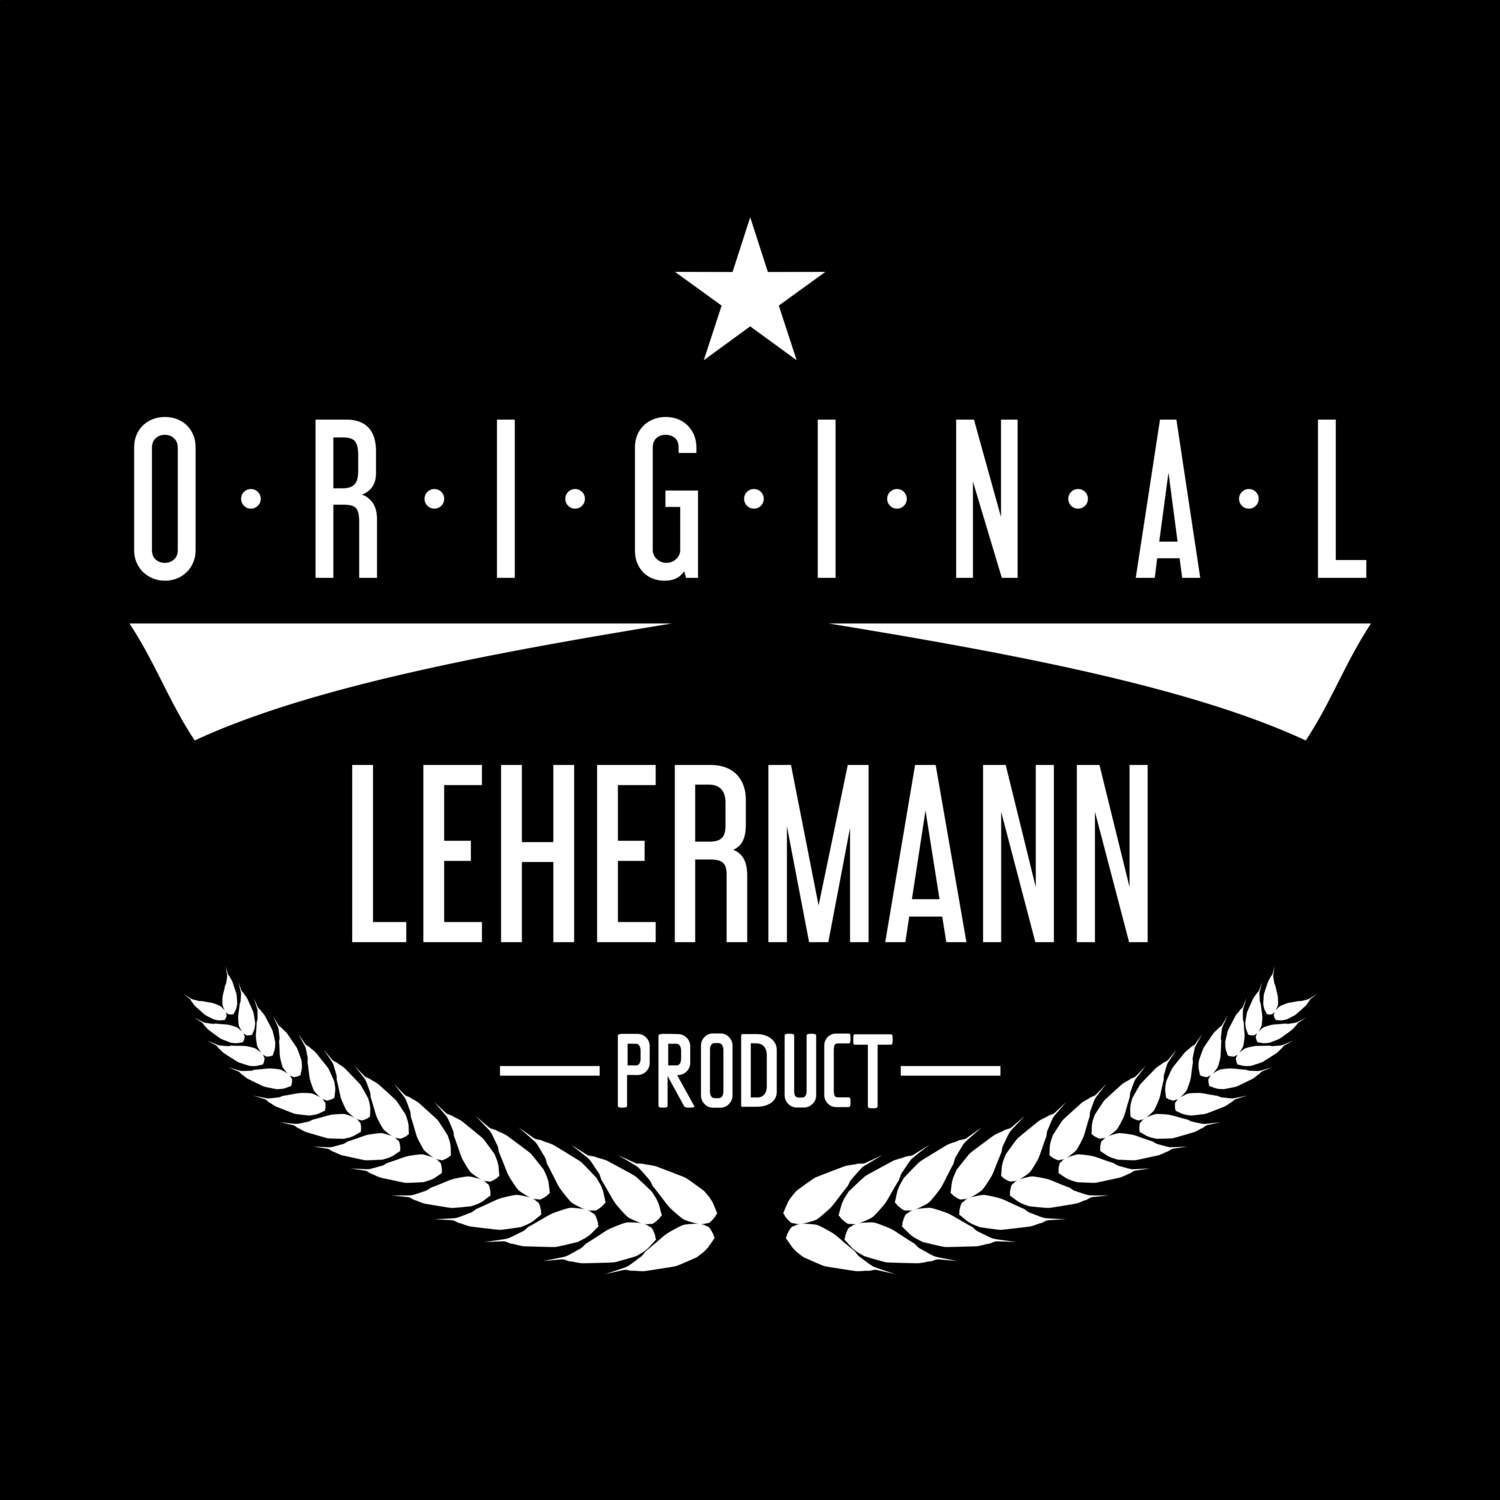 Lehermann T-Shirt »Original Product«